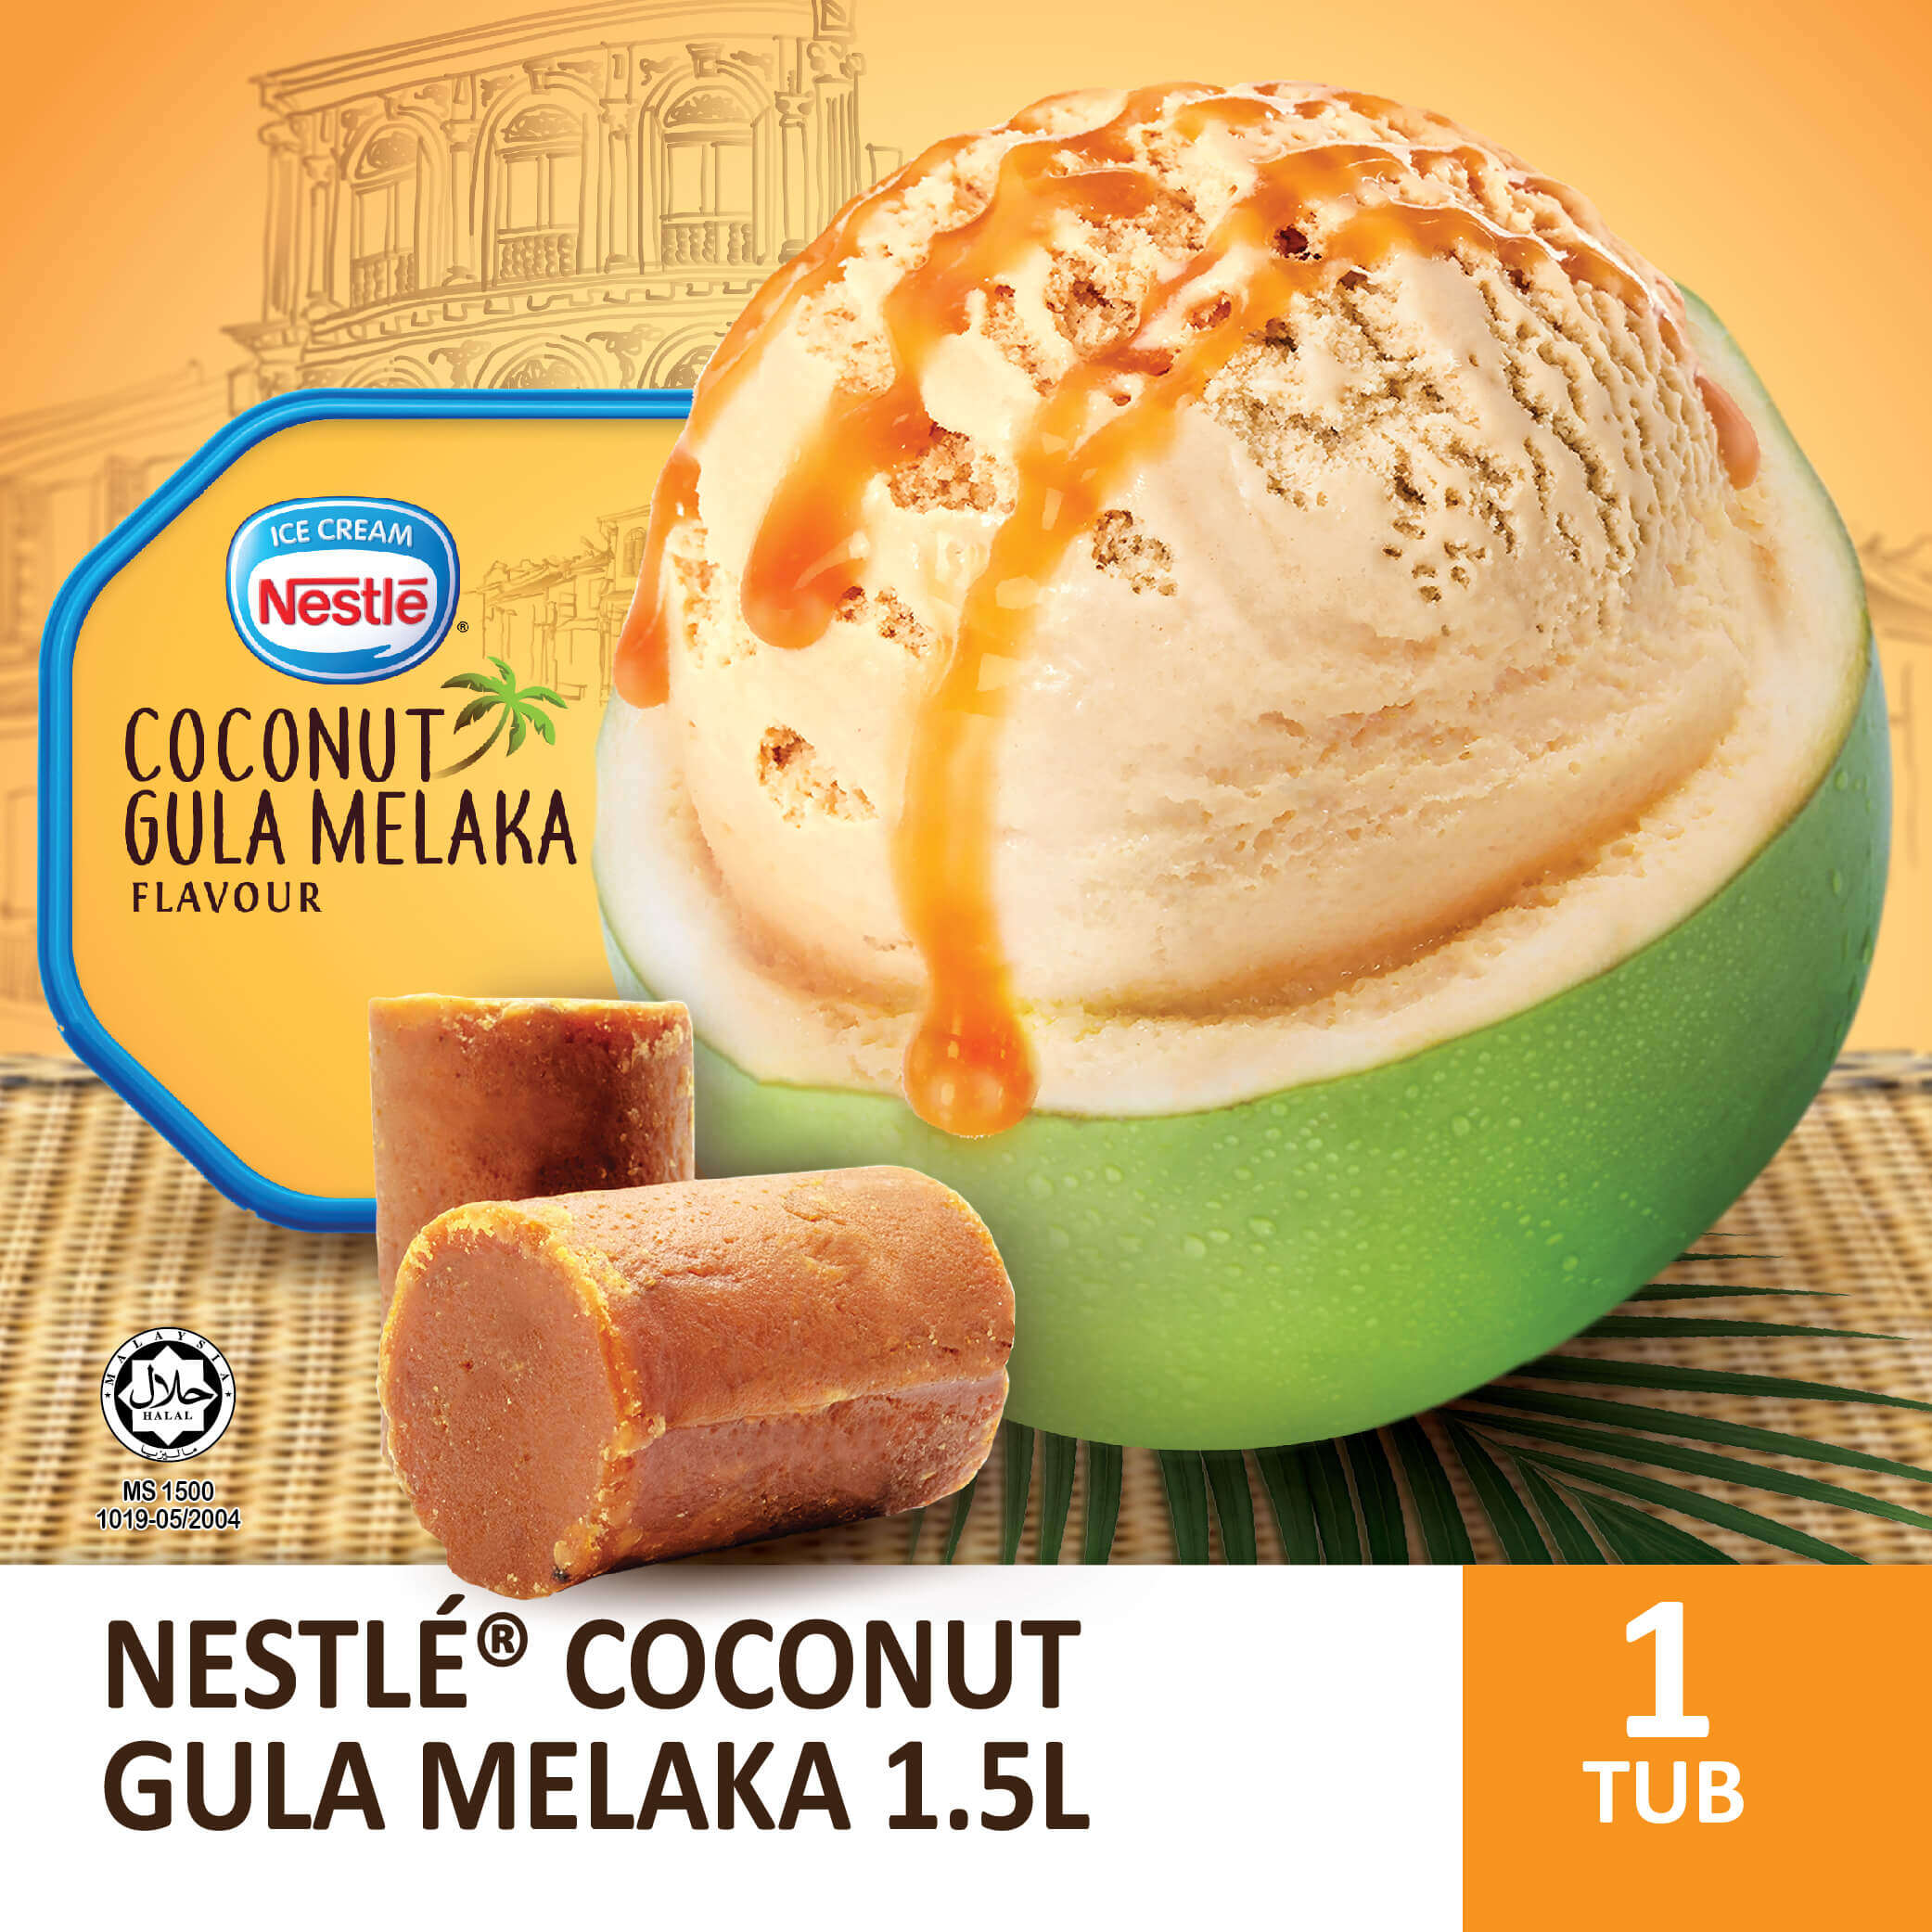 King nestle malaysia price musang cream ice Nestle posts